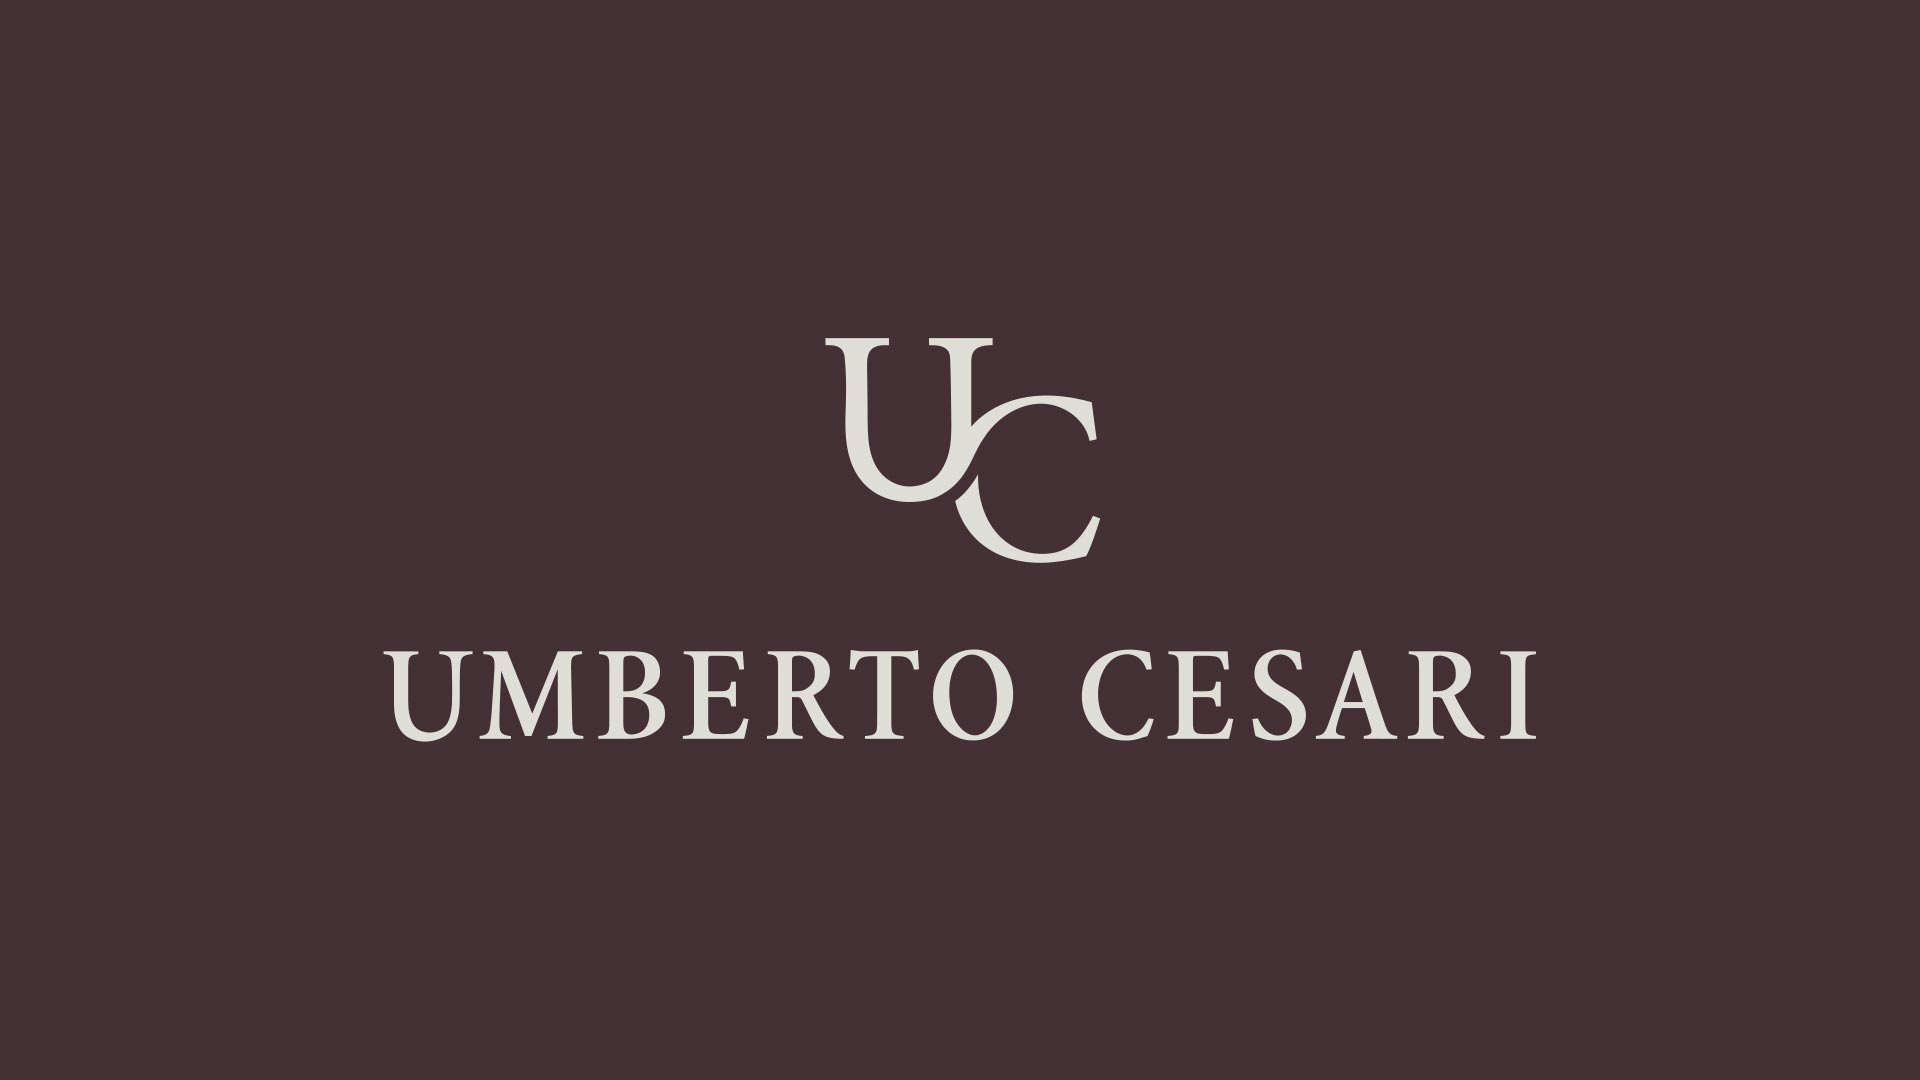 Umberto Cesari: Italian Wine Industry Enhanced by New Brand Identity